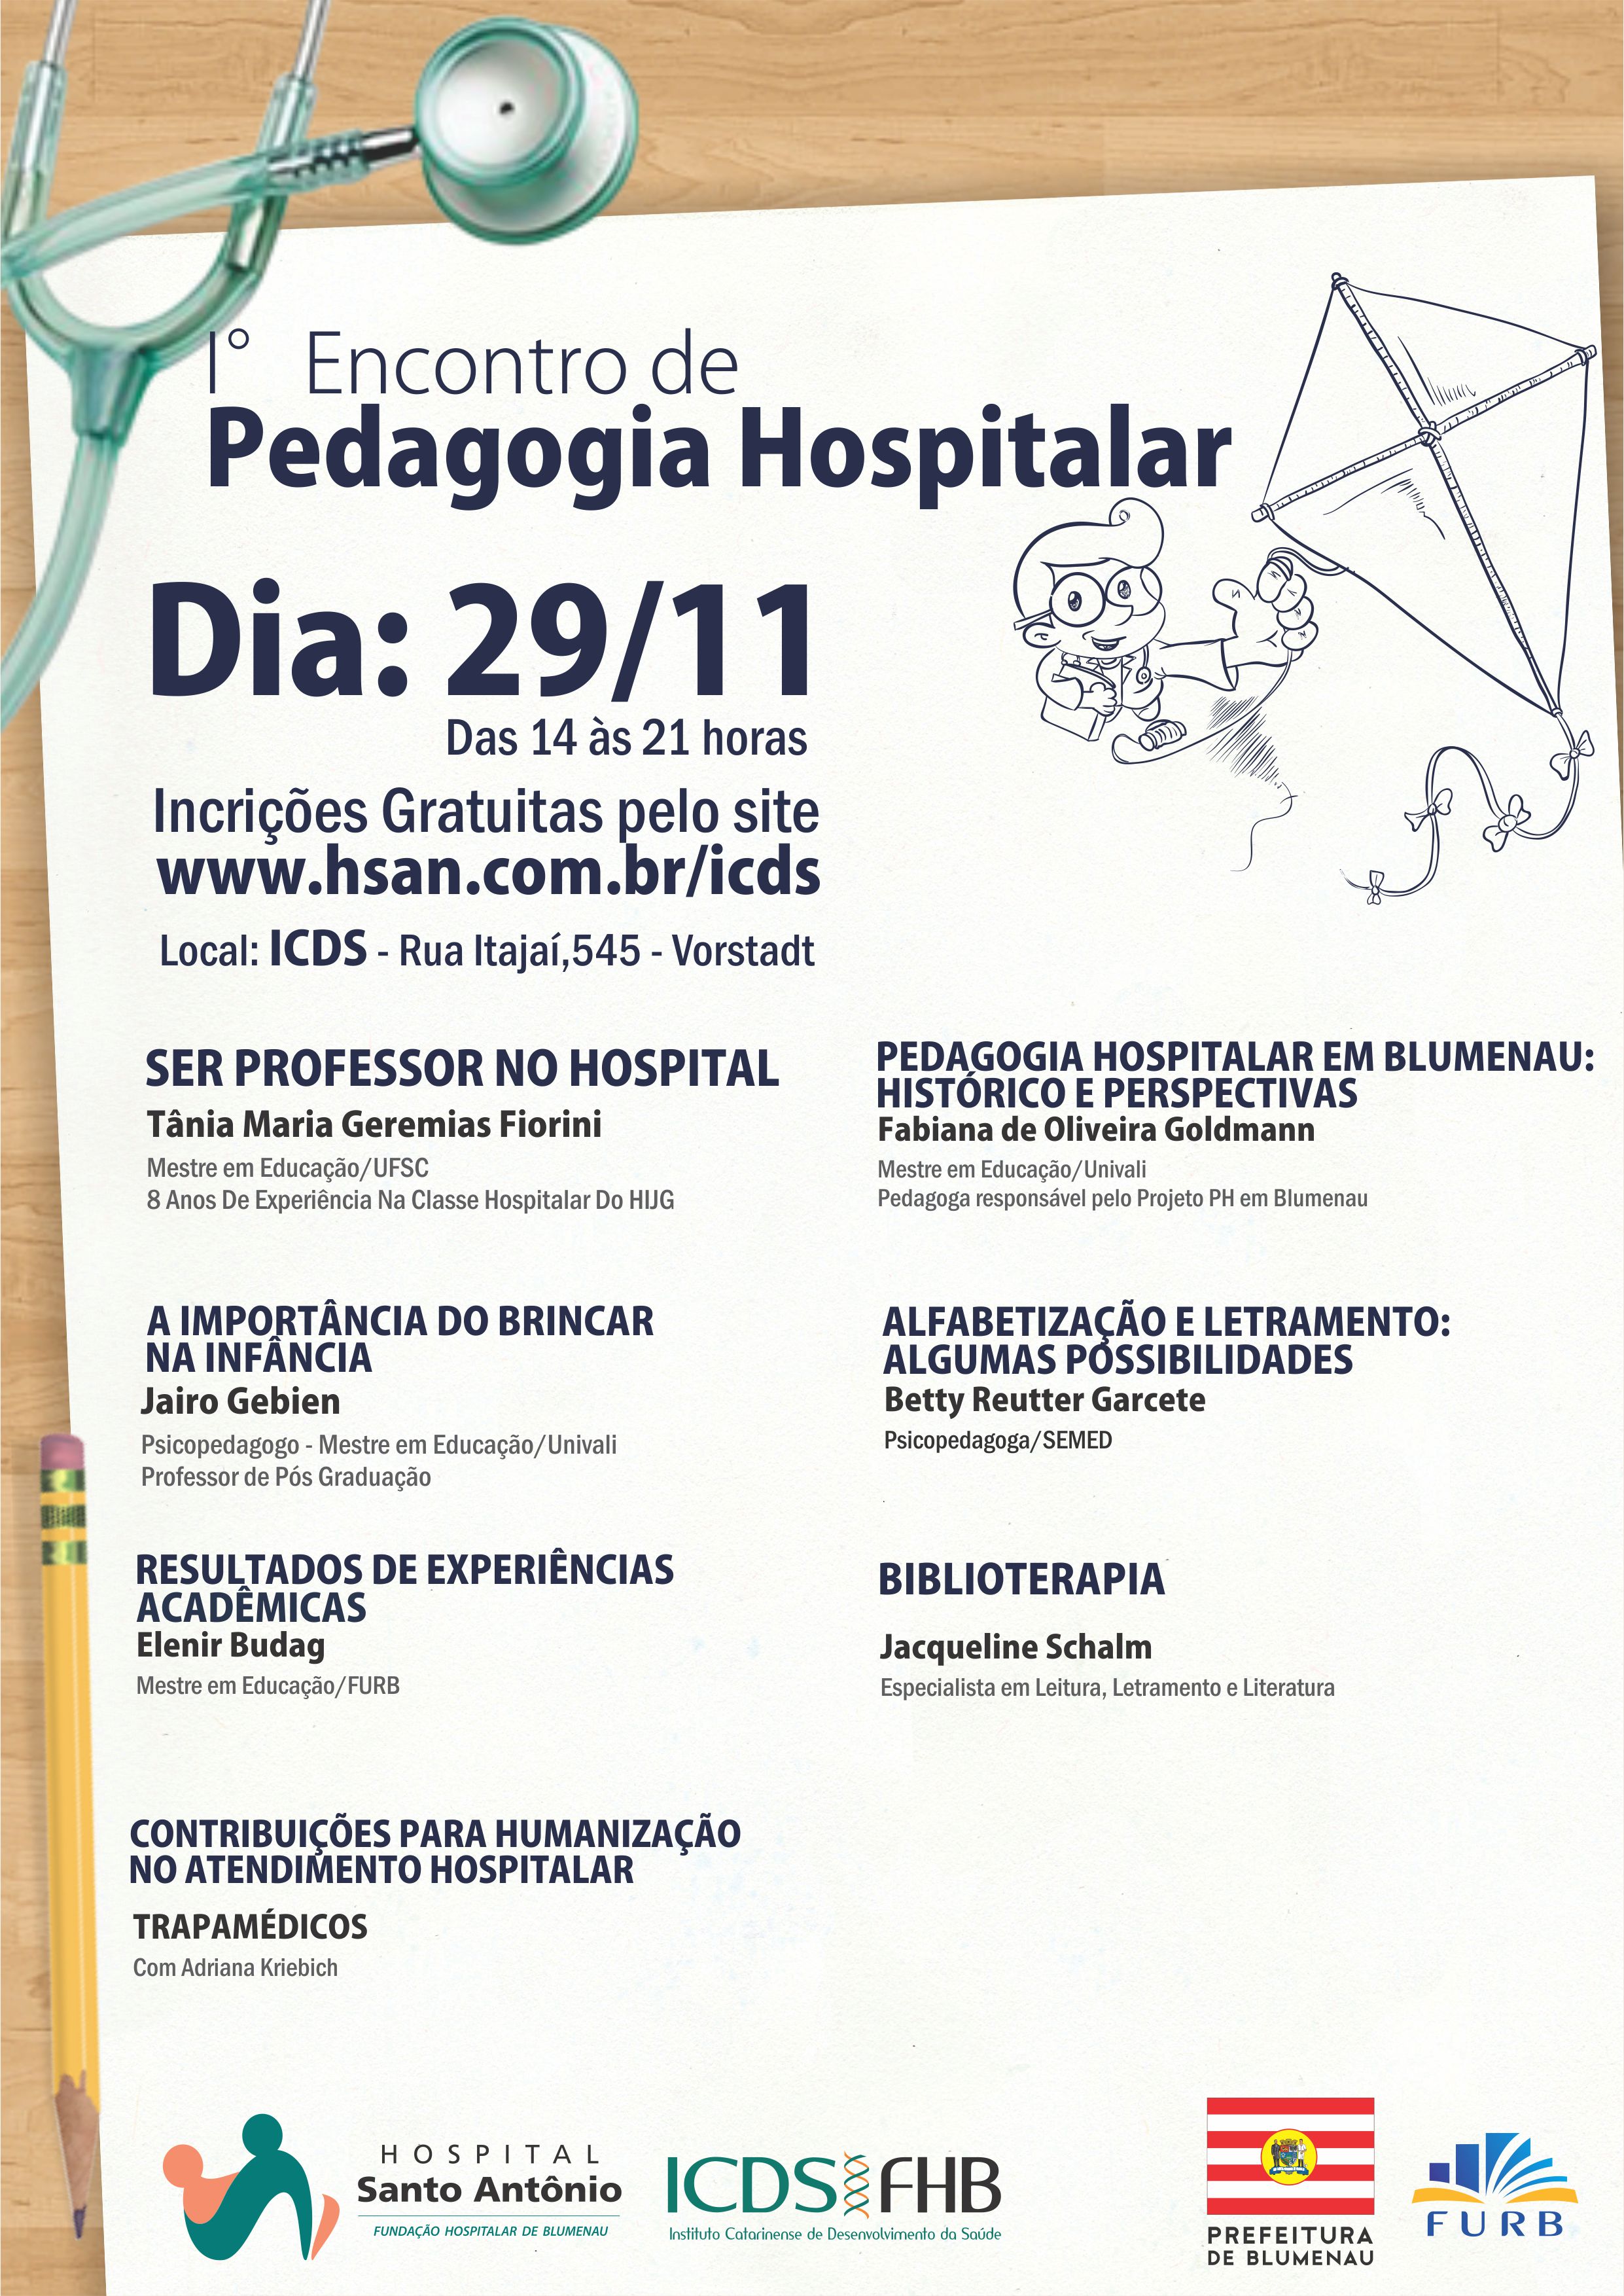 I Encontro De Pedagogia Hospitalar Hospital Santo Antonio